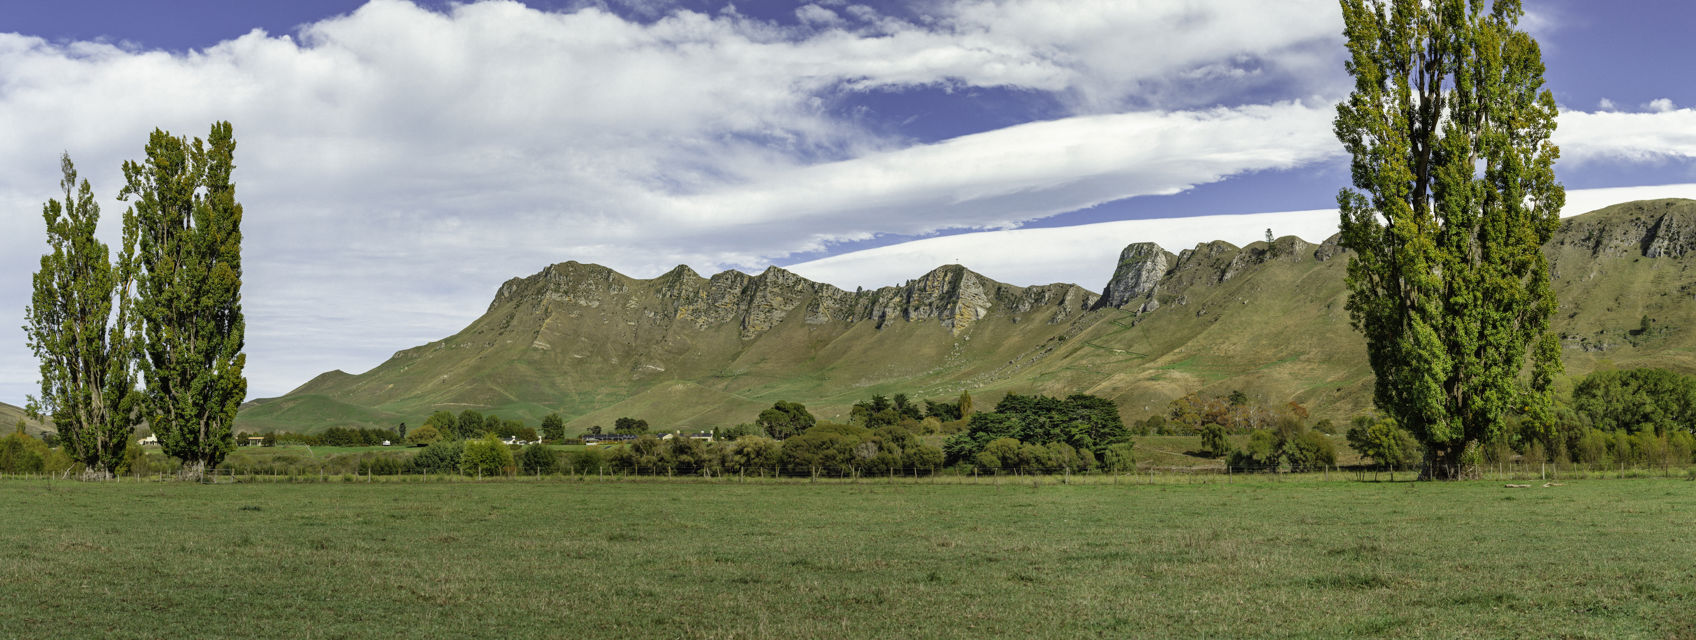 Te Mata Peak & Range From Tukituki Road - Looking back over the range and farmland from Tukituki Road